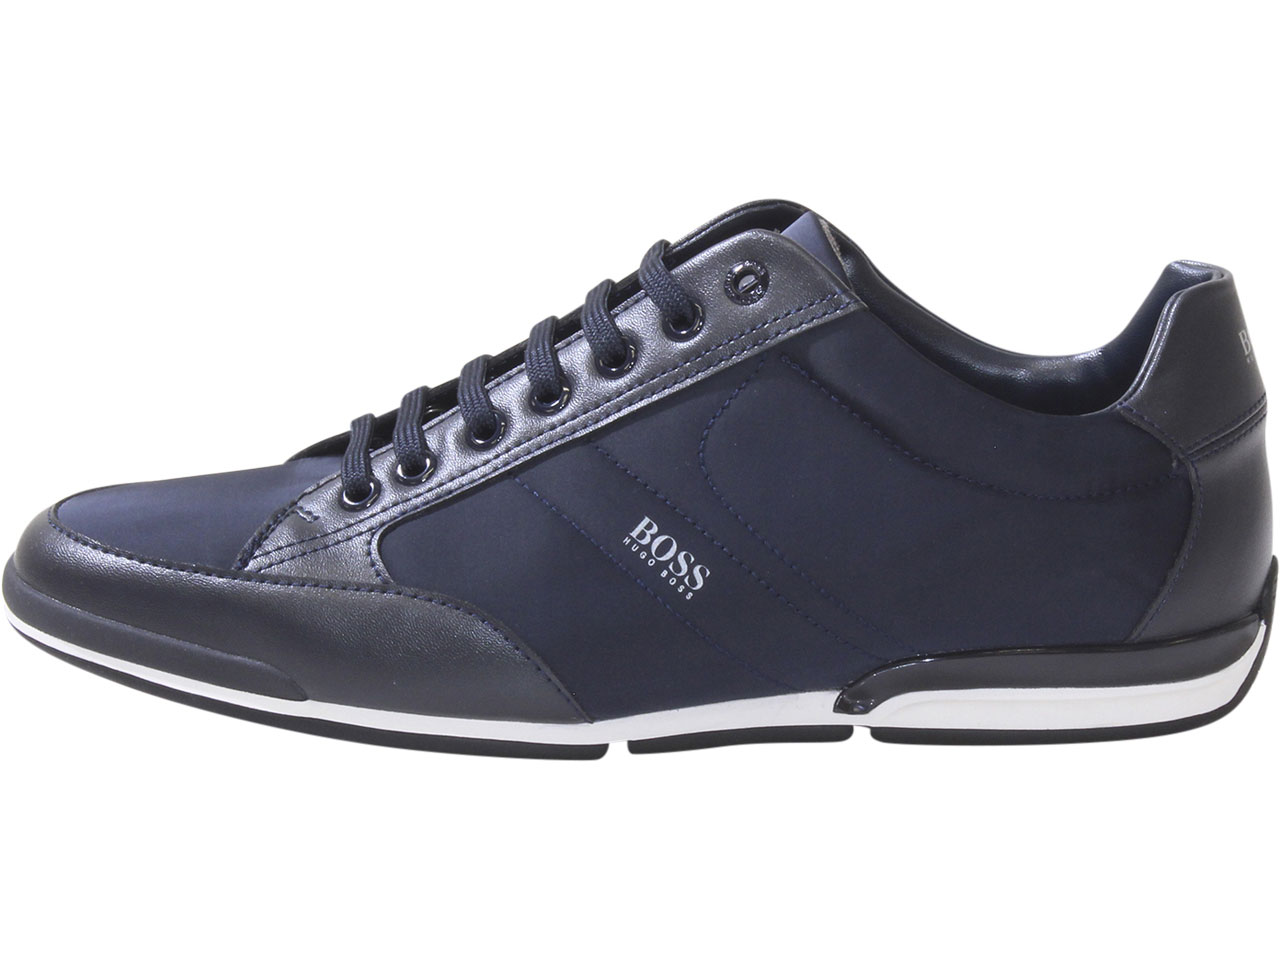 Splendor Fundament Korrekt Hugo Boss Men's Saturn Sneakers Low Top Trainers Memory Foam Dark Blue Sz:  12 | JoyLot.com